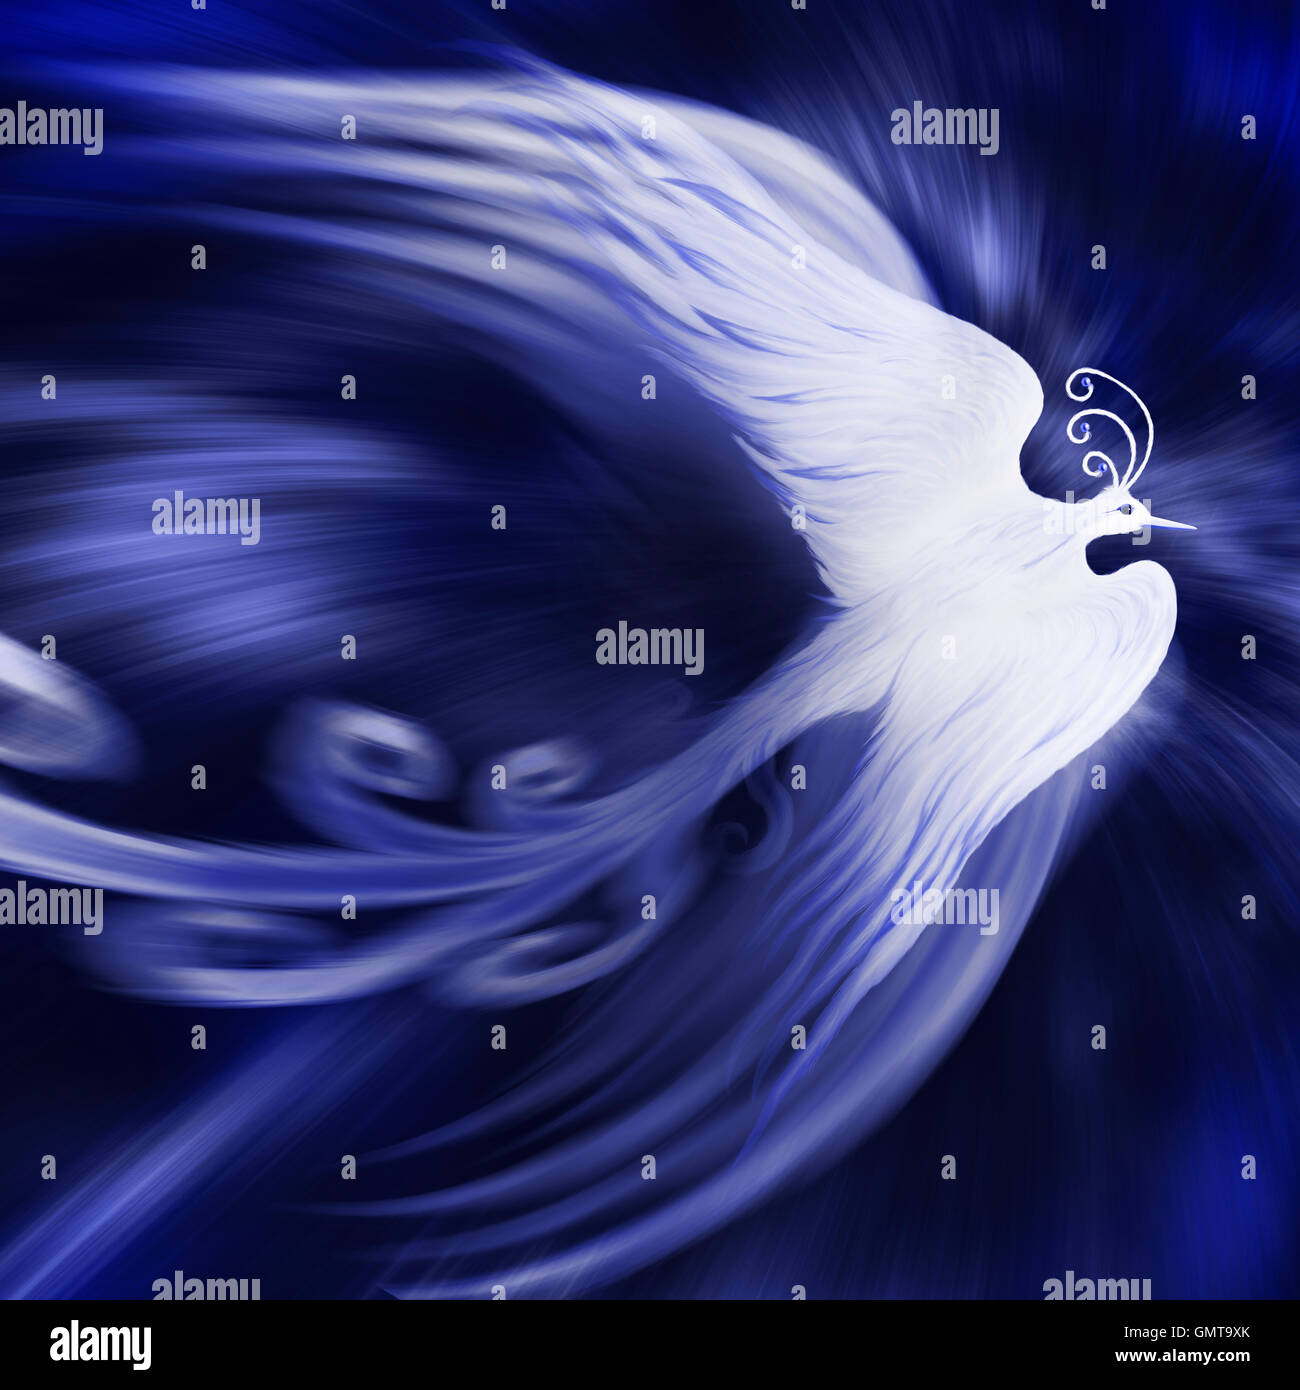 Blue magical phoenix bird on cosmic background artistic design illustration Stock Photo